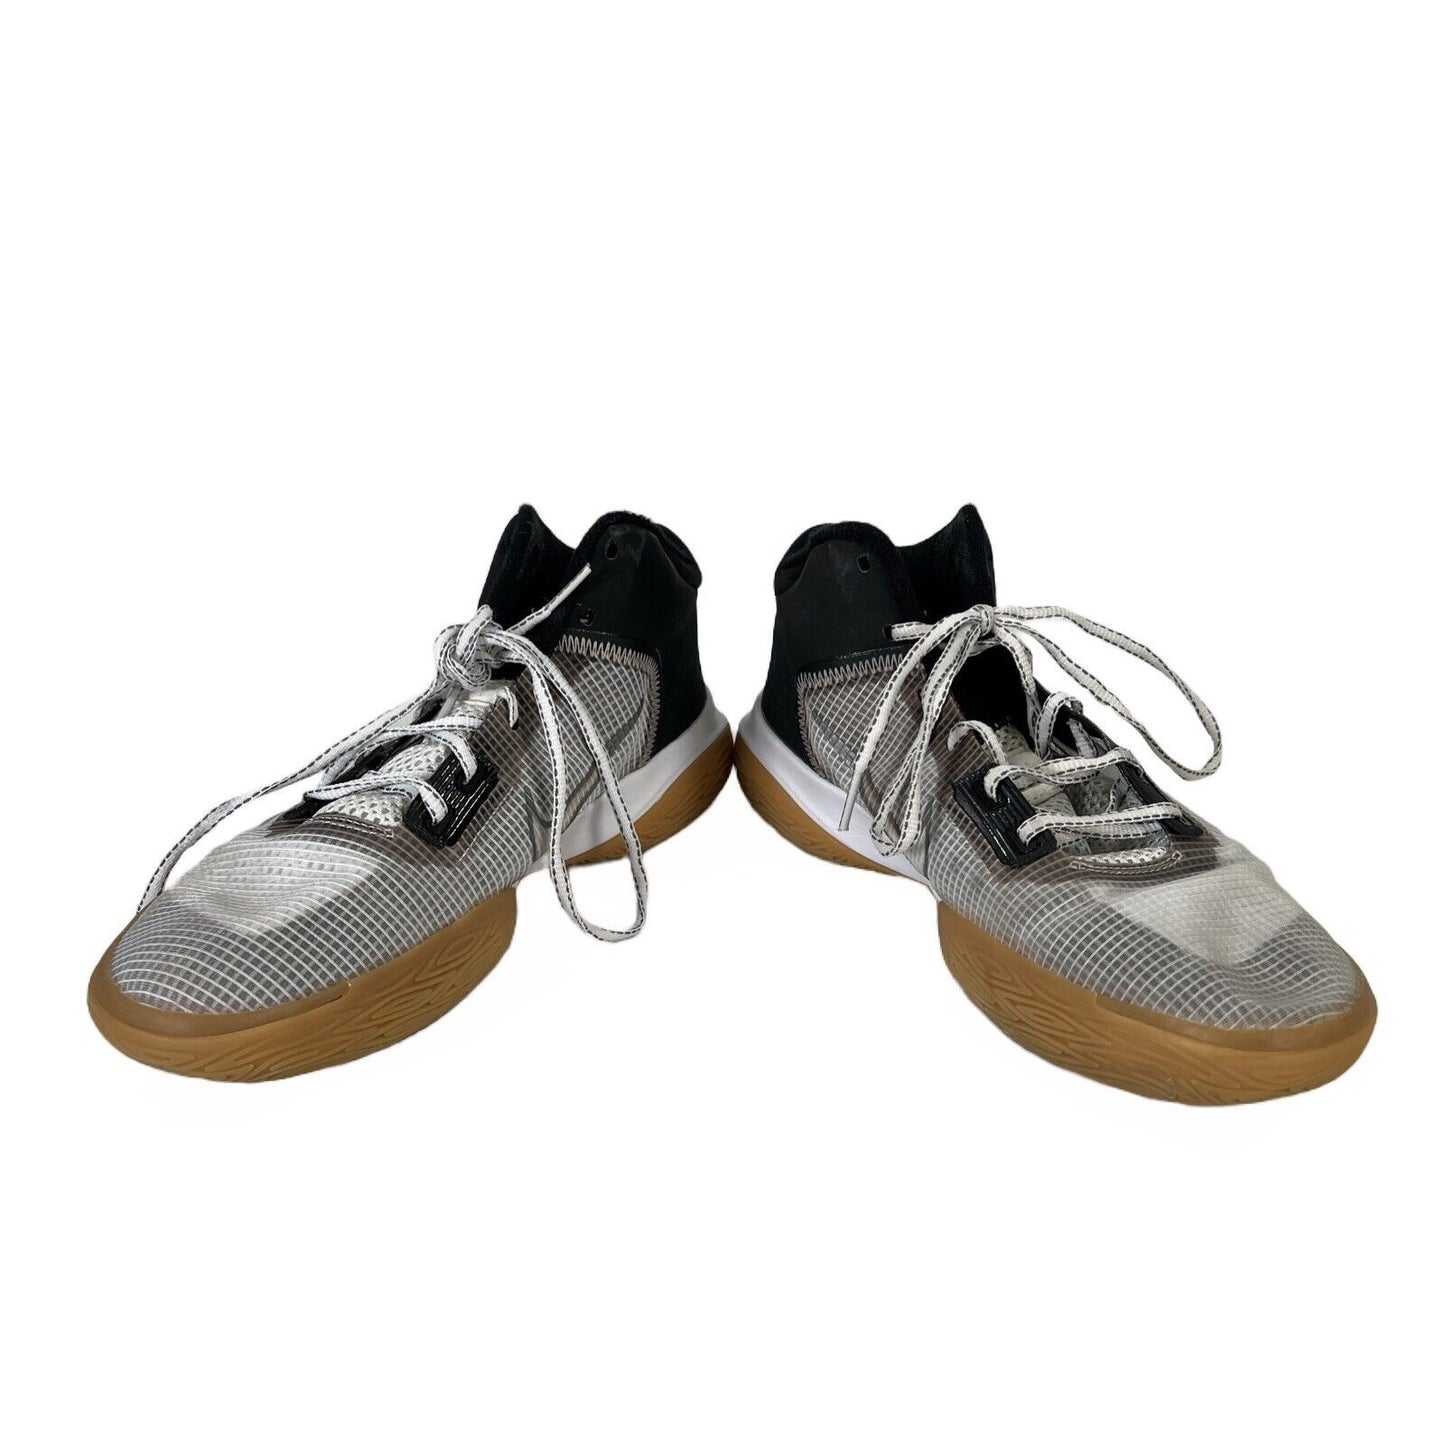 Nike Men's Black/White Kyrie Flytrap 4 Lace Up Basketball Shoes - 10